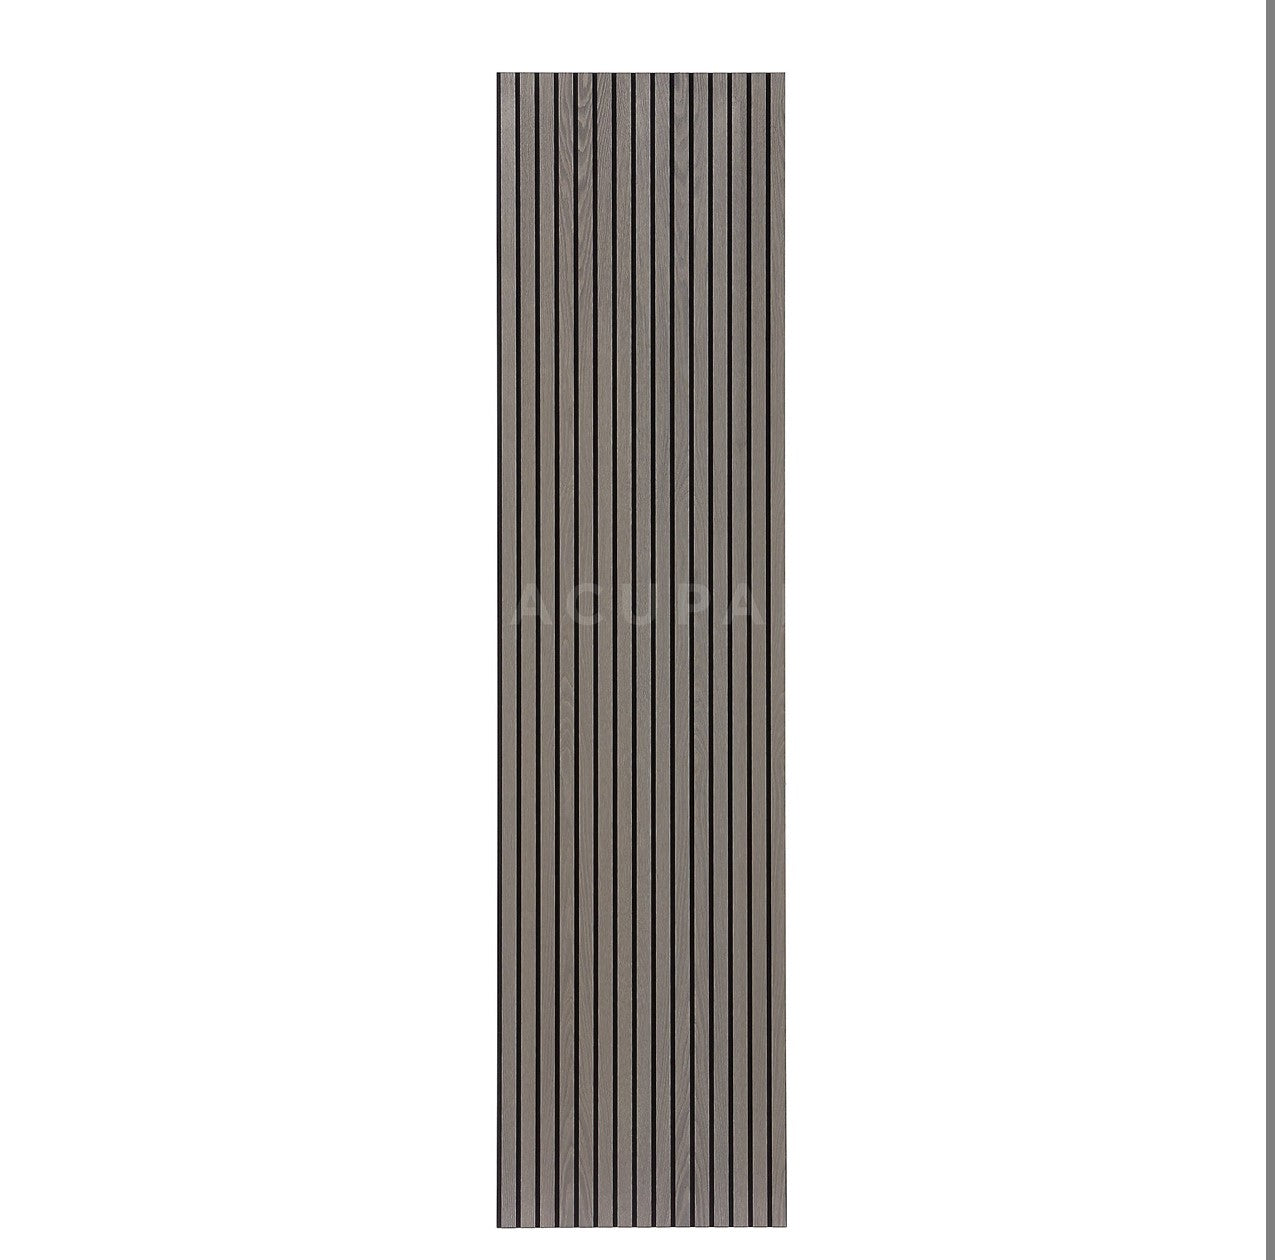 Acupanel Contemporary Grey Oak Wood Slat Wall Panel (Non-Acoustic) 240cm x 60cm (R6)